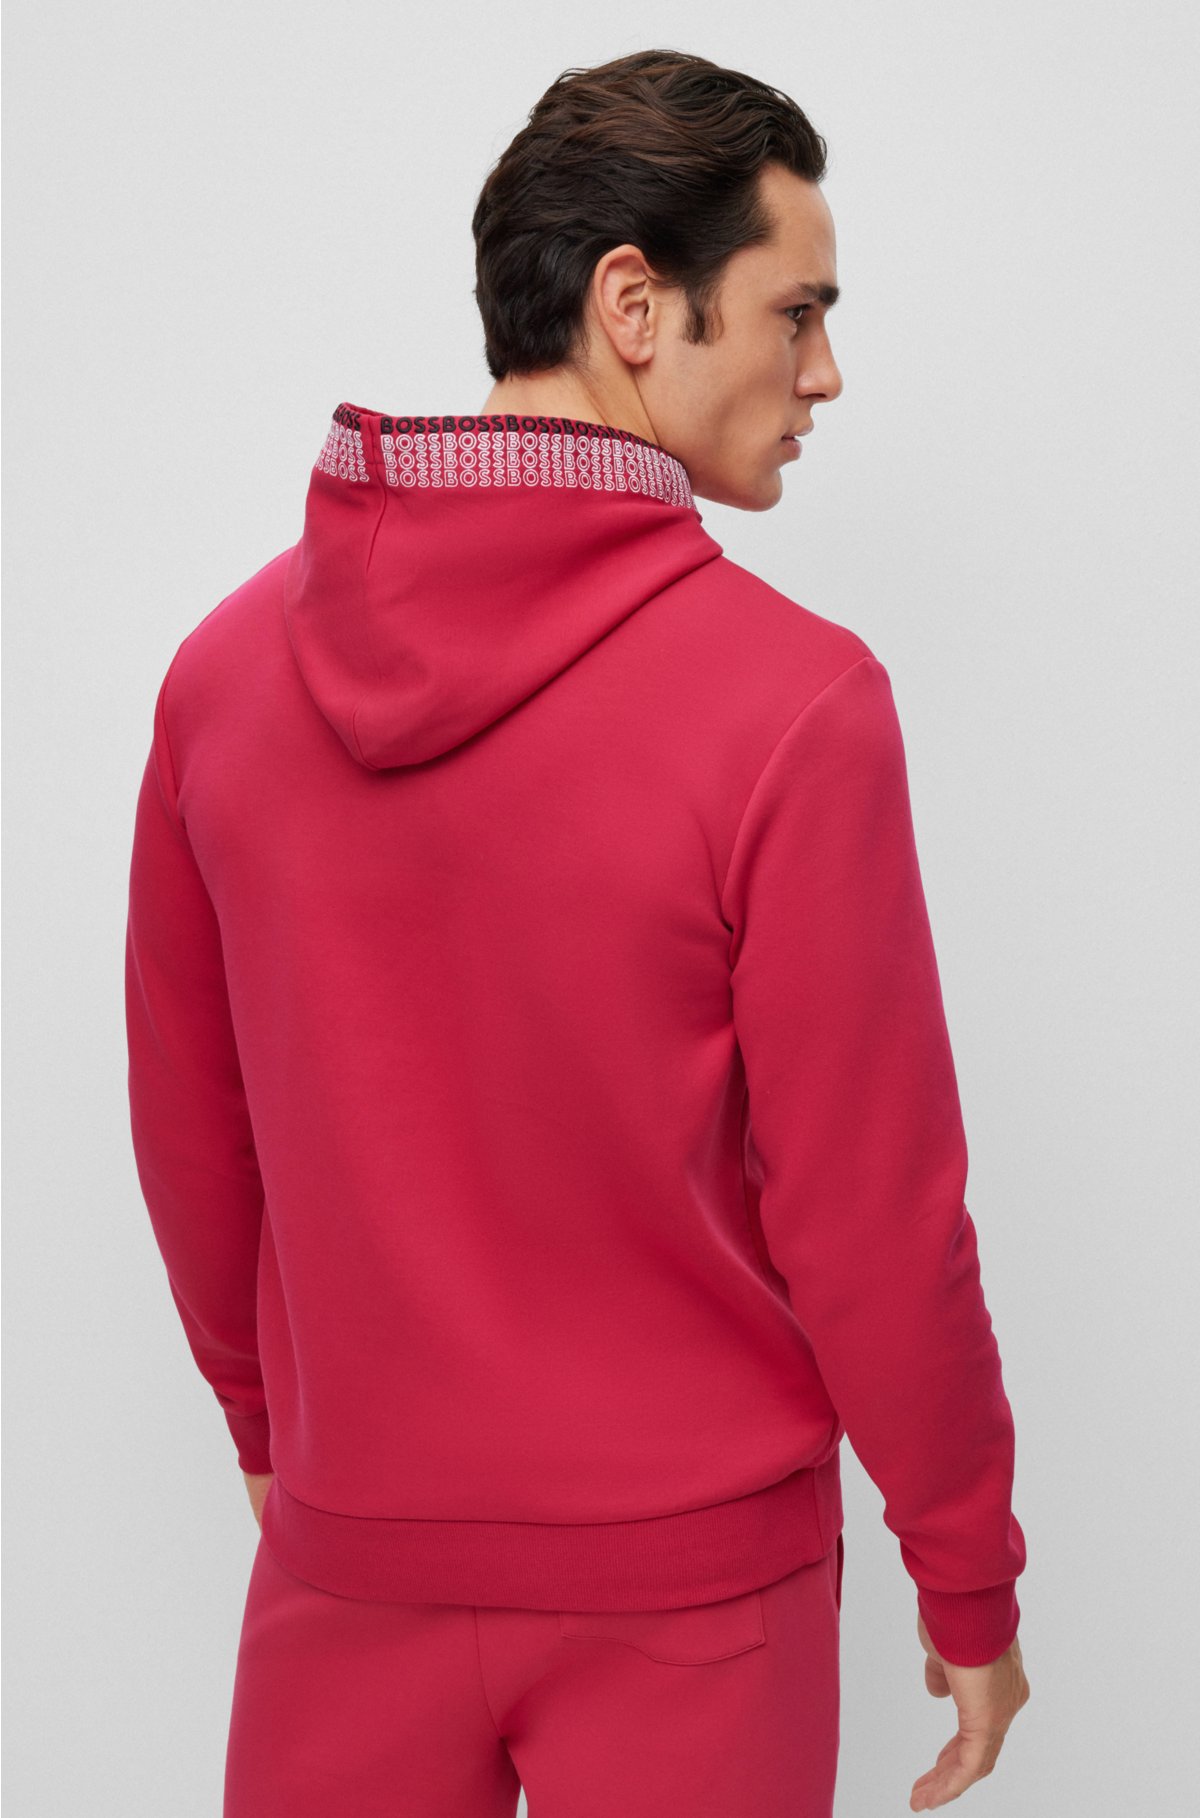 Hugo Boss DARK PINK Men's Color Block Logo Tape Zip Up Sweatshirt, US Large